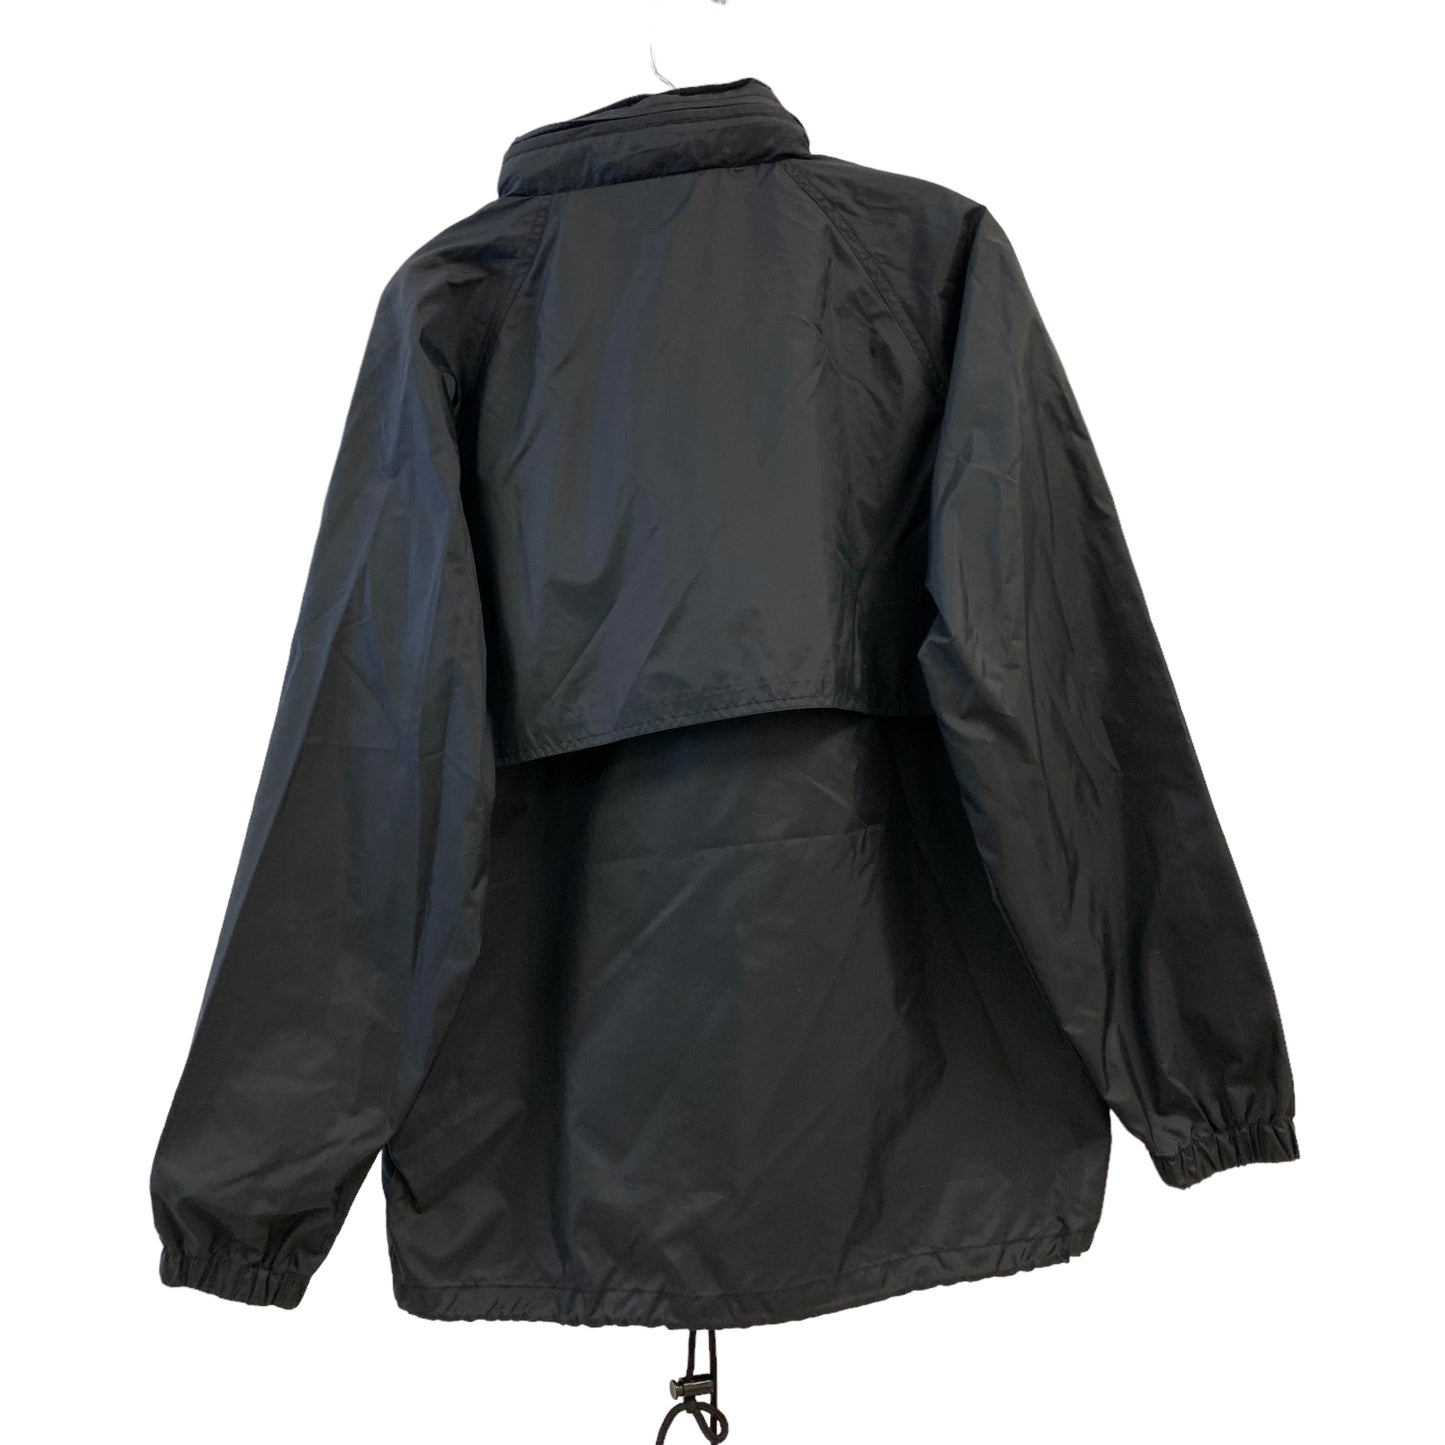 Jacket Windbreaker By Acadia   Size: S